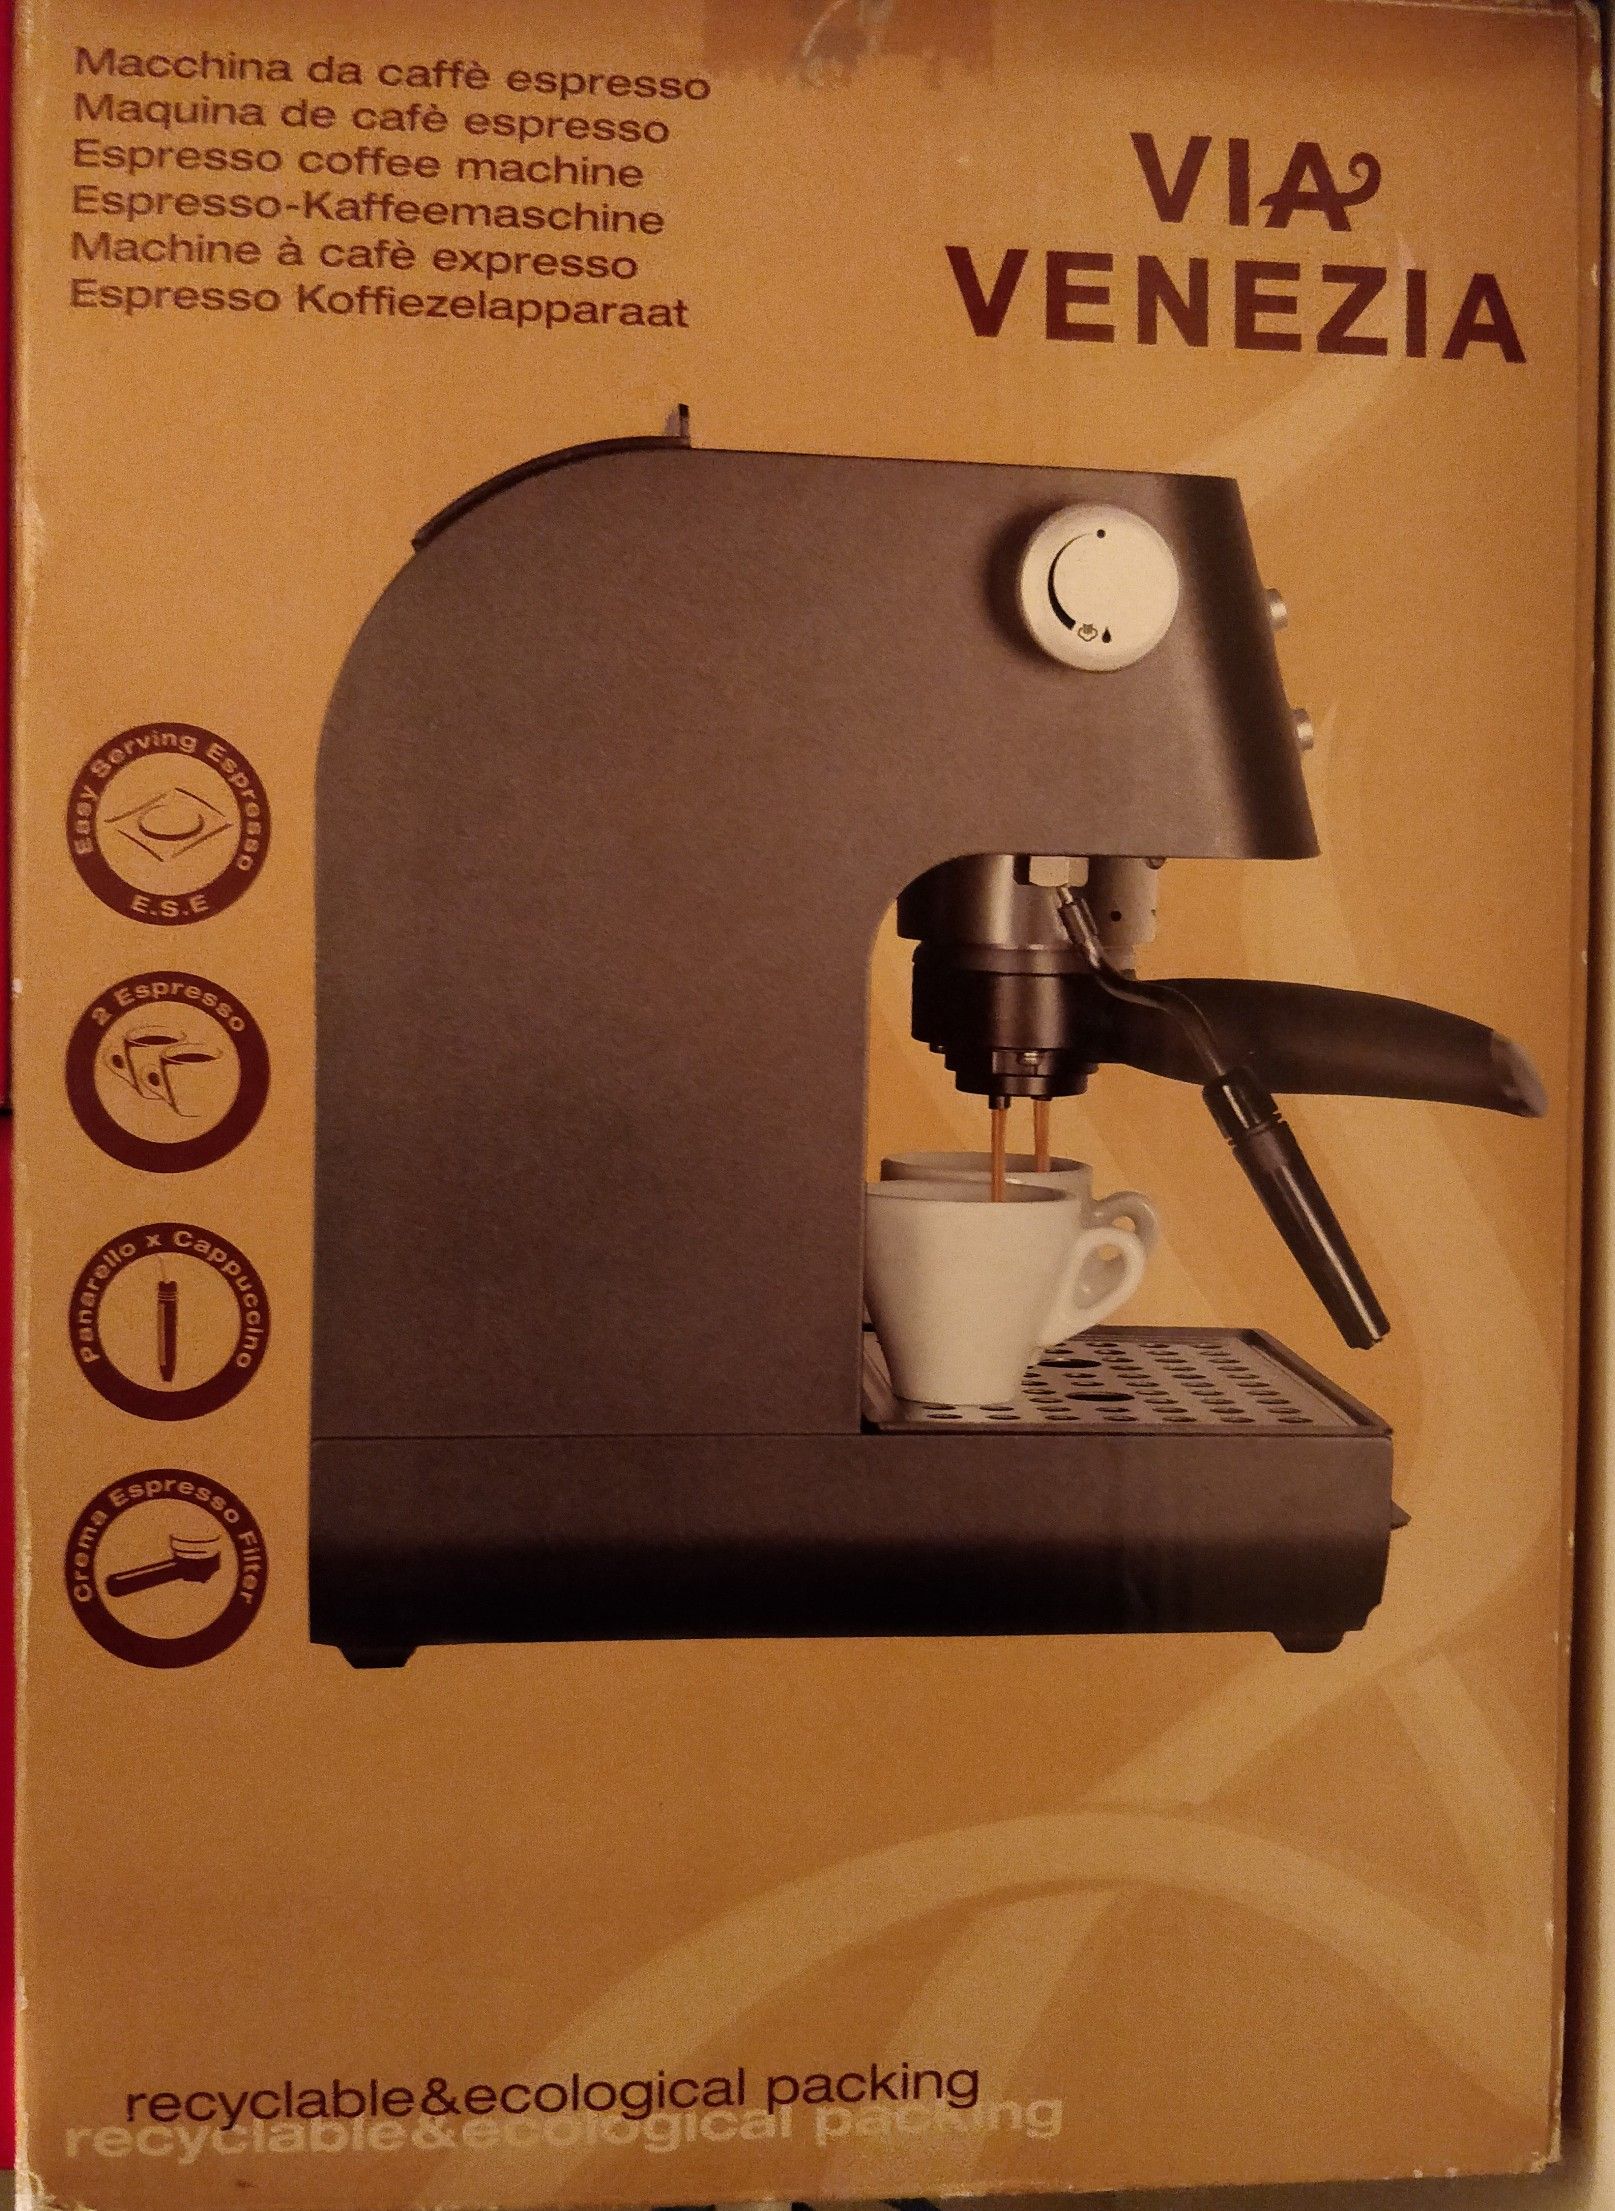 Ninja Espresso And Coffee Barista System for Sale in Hoboken, NJ - OfferUp